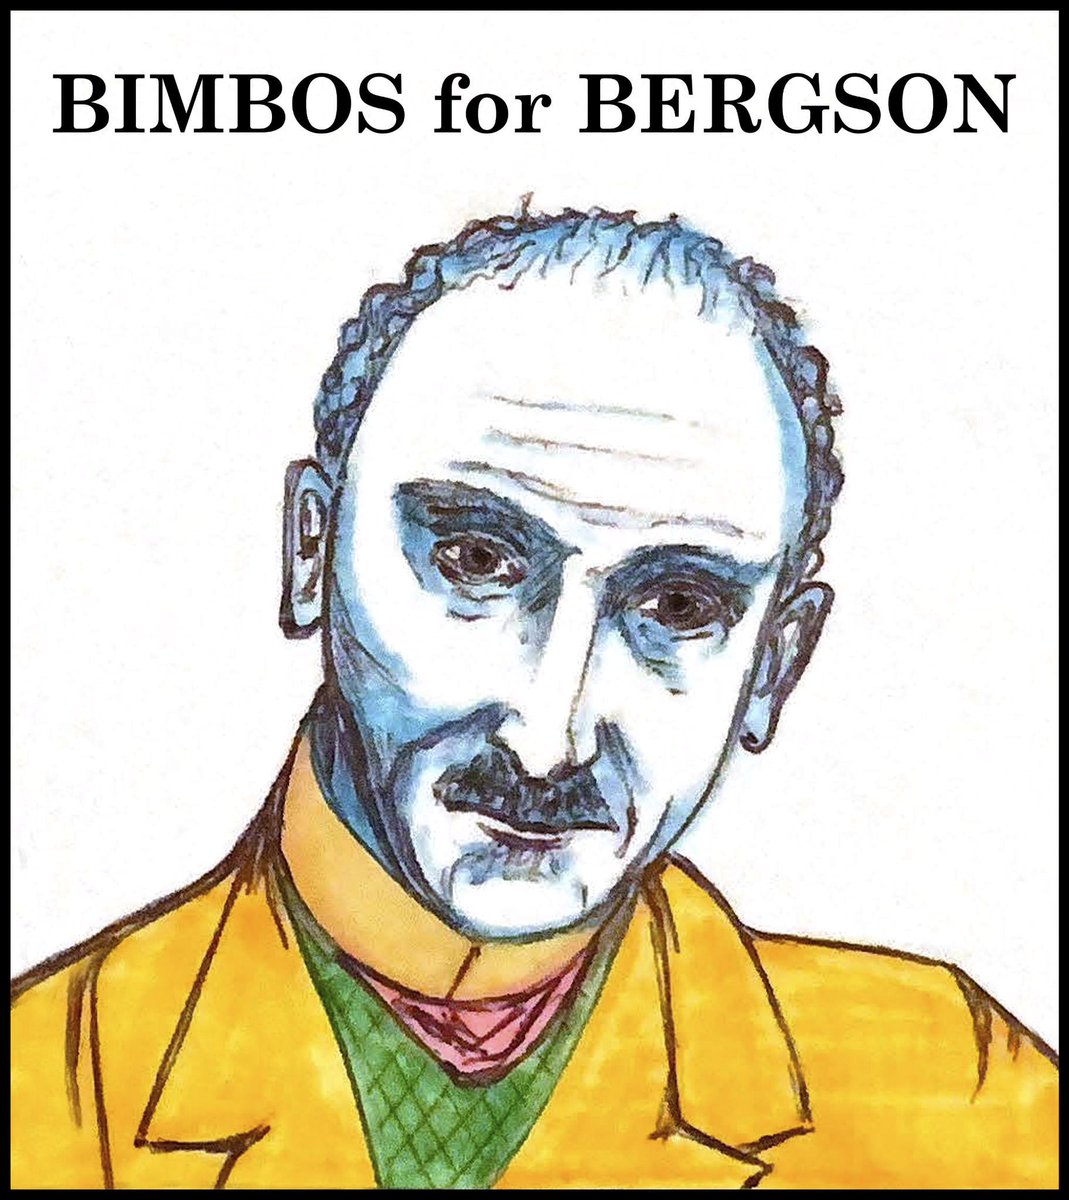 Bimbos for Bergson, baybee!!